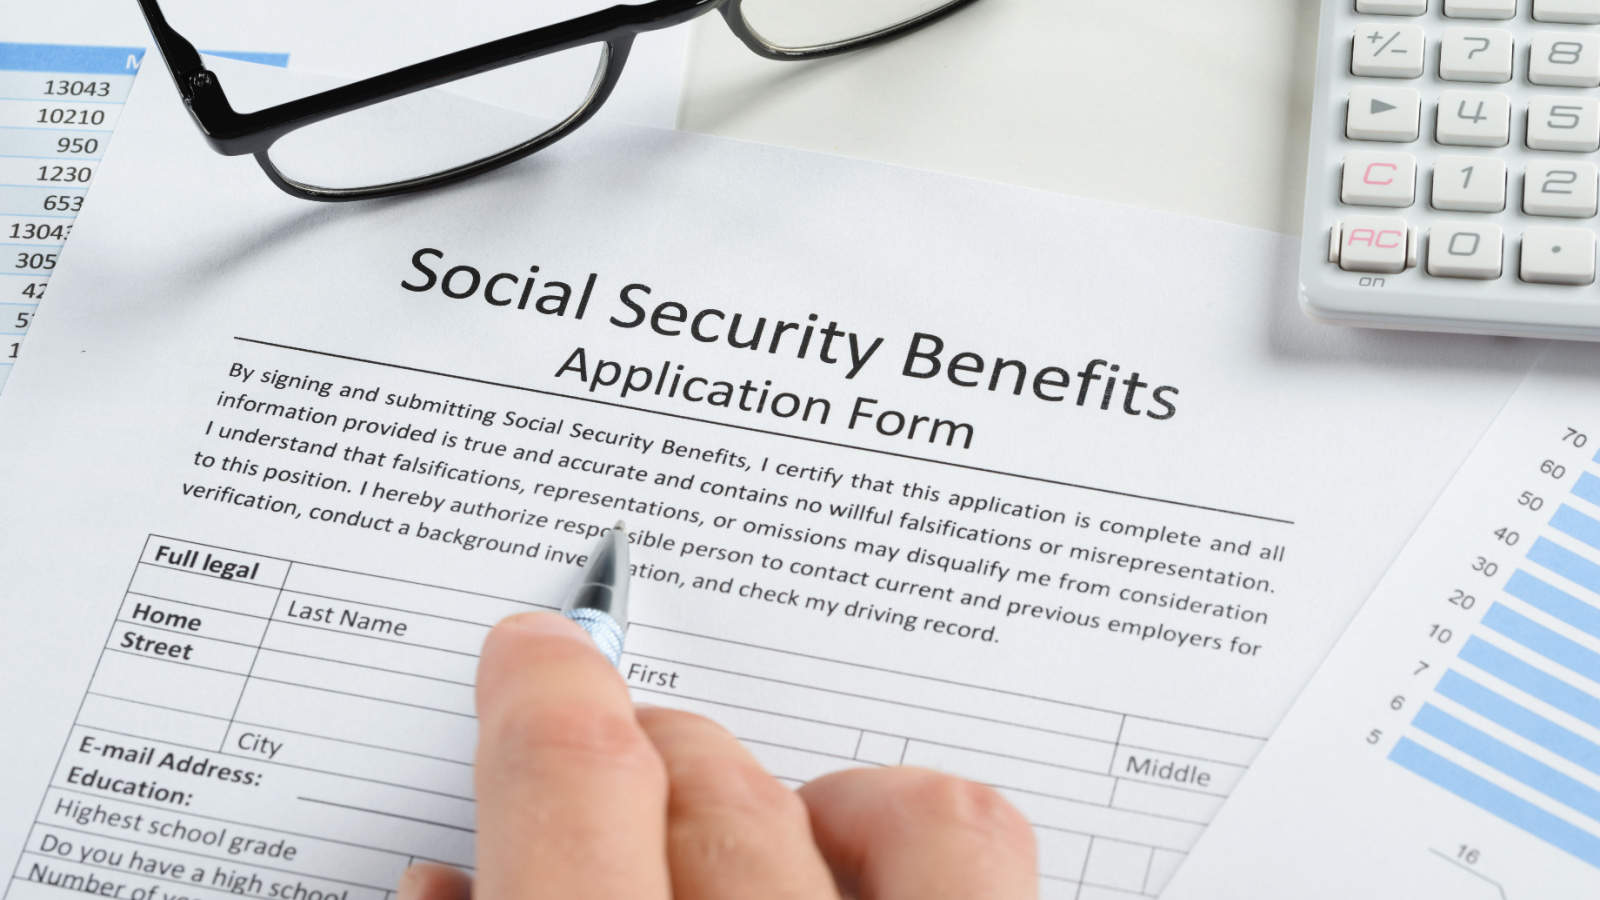 Social security benefits form.